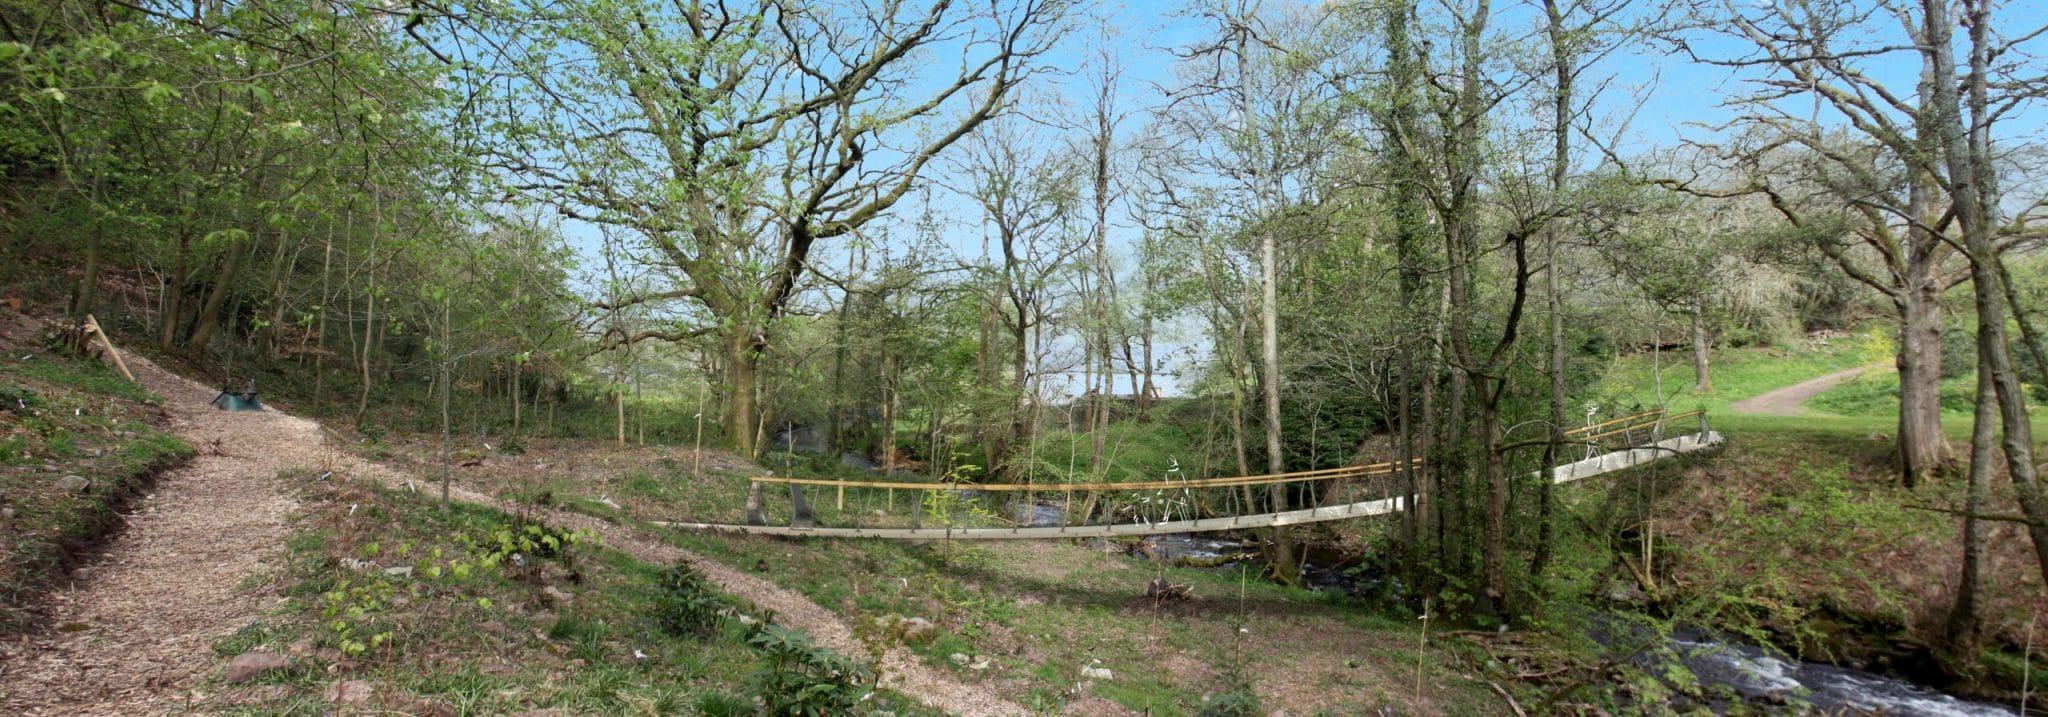 Elevation of stress ribbon footbridge over stream